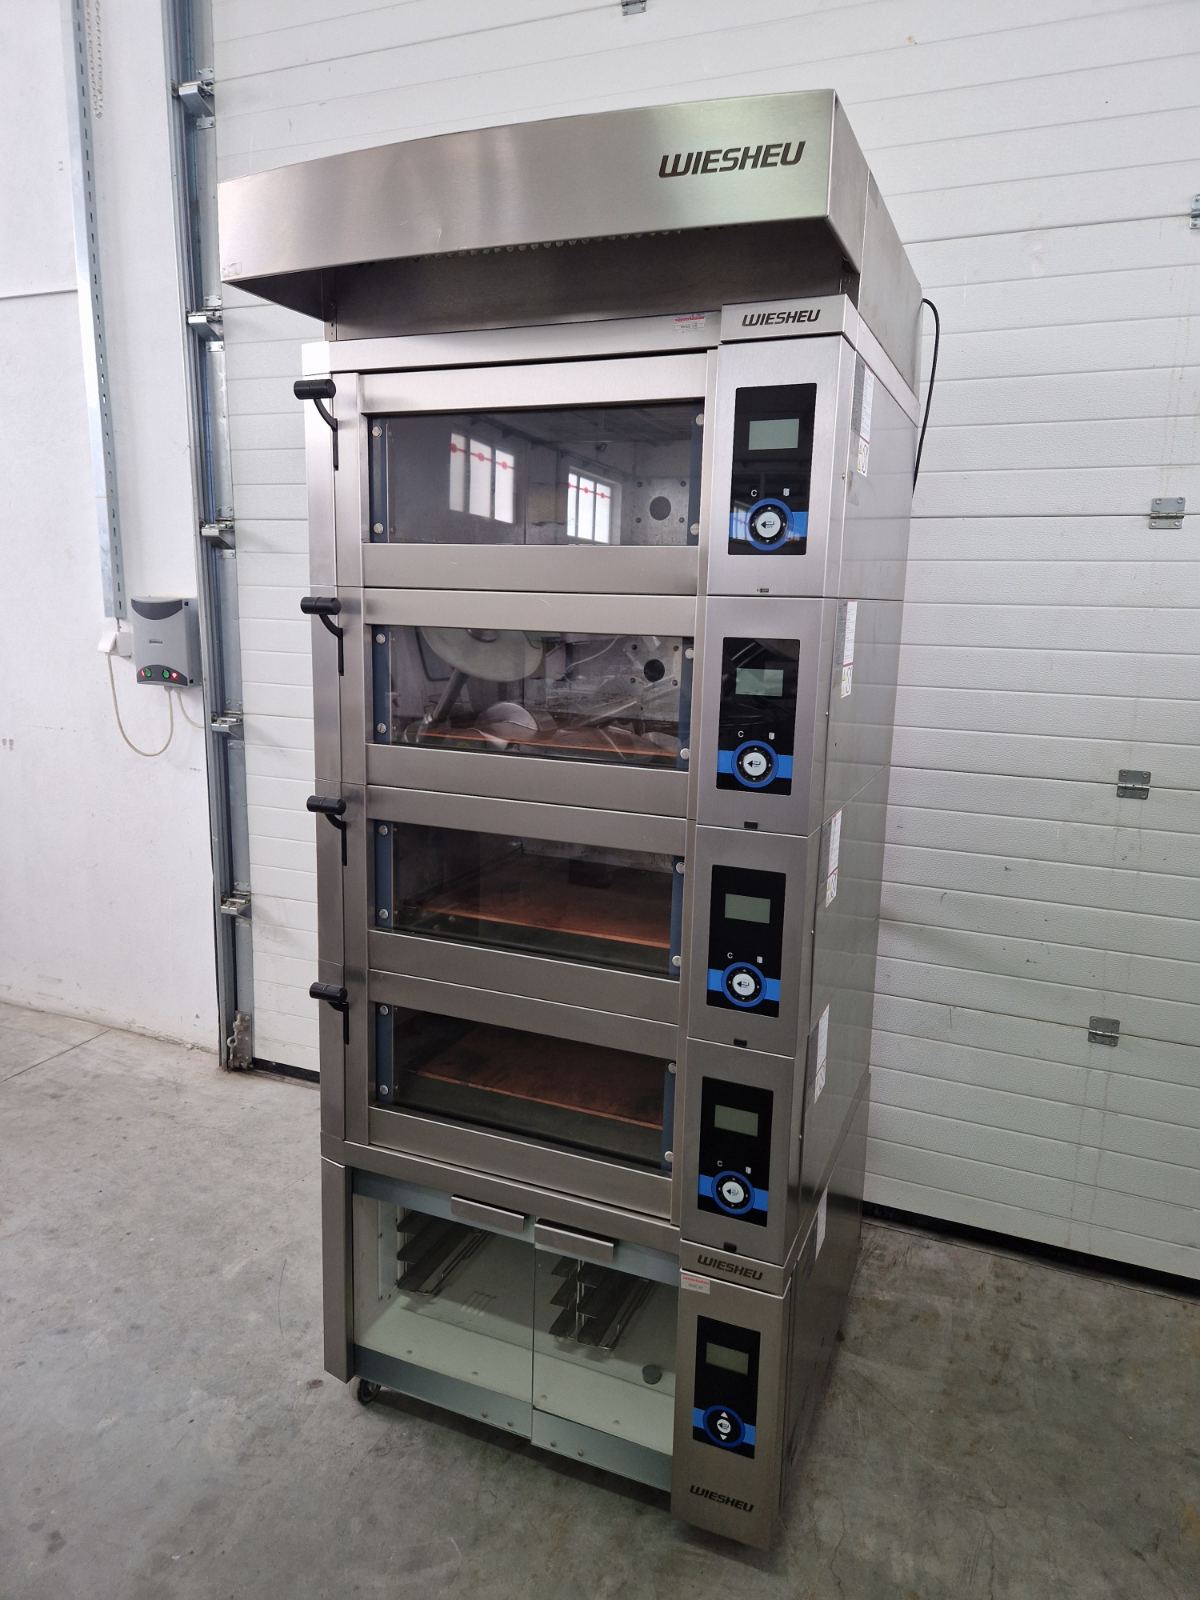 Wiesheu - Baking oven with 4 levels, hood and fermentation chamber Ebo 64-M-Backofen